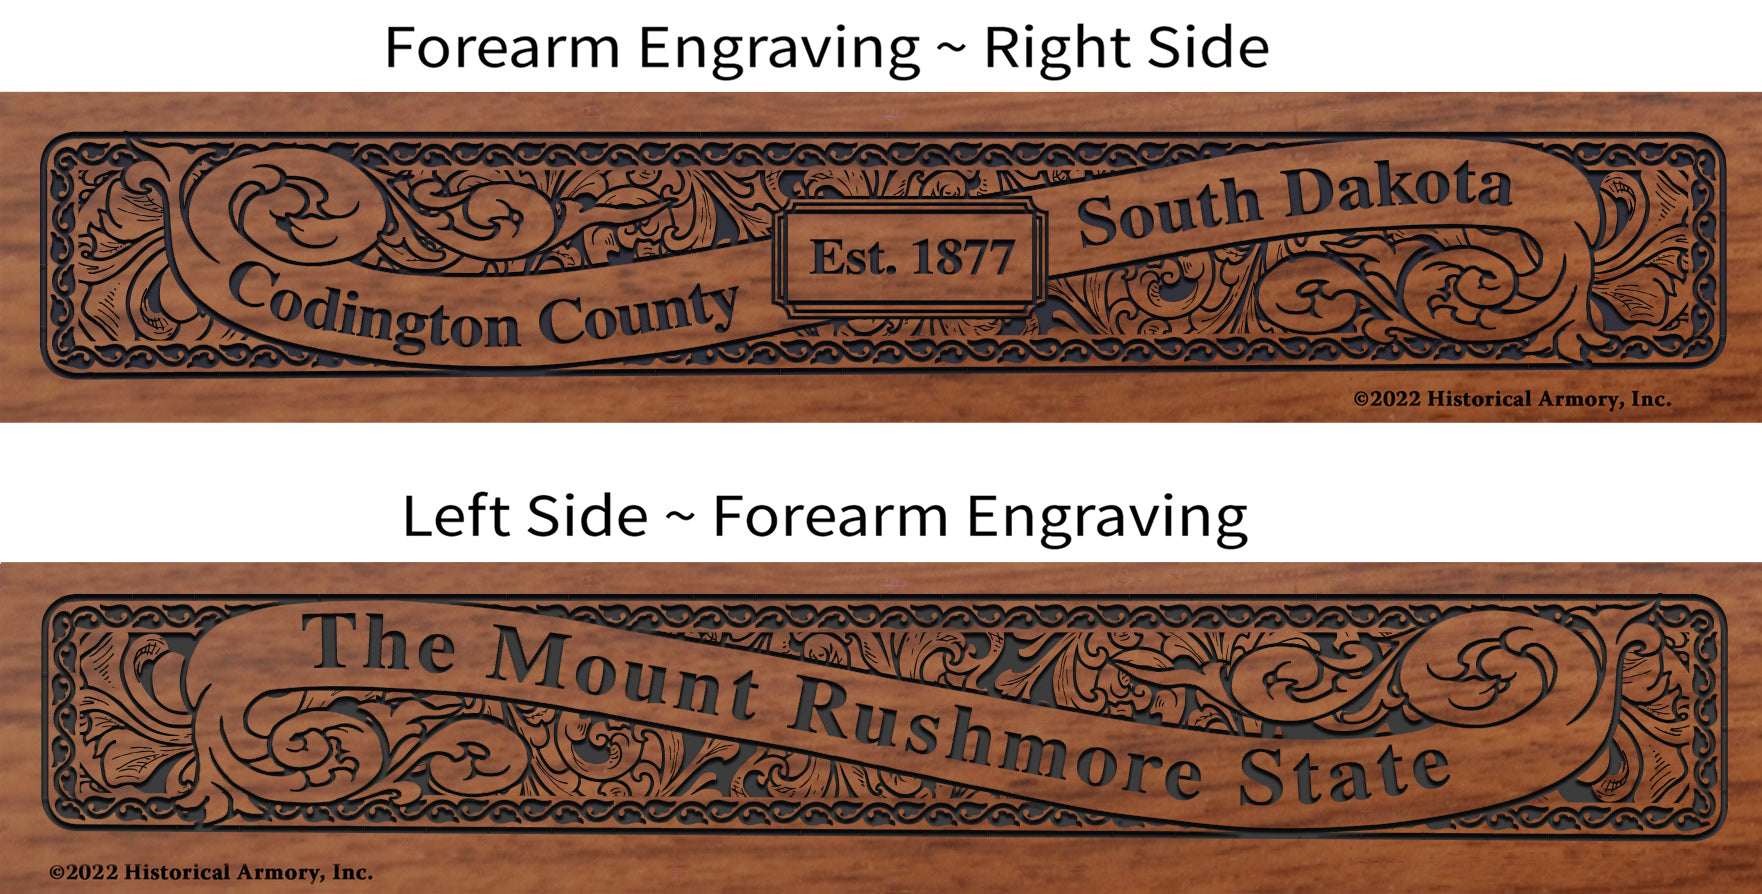 Codington County South Dakota Engraved Rifle Forearm